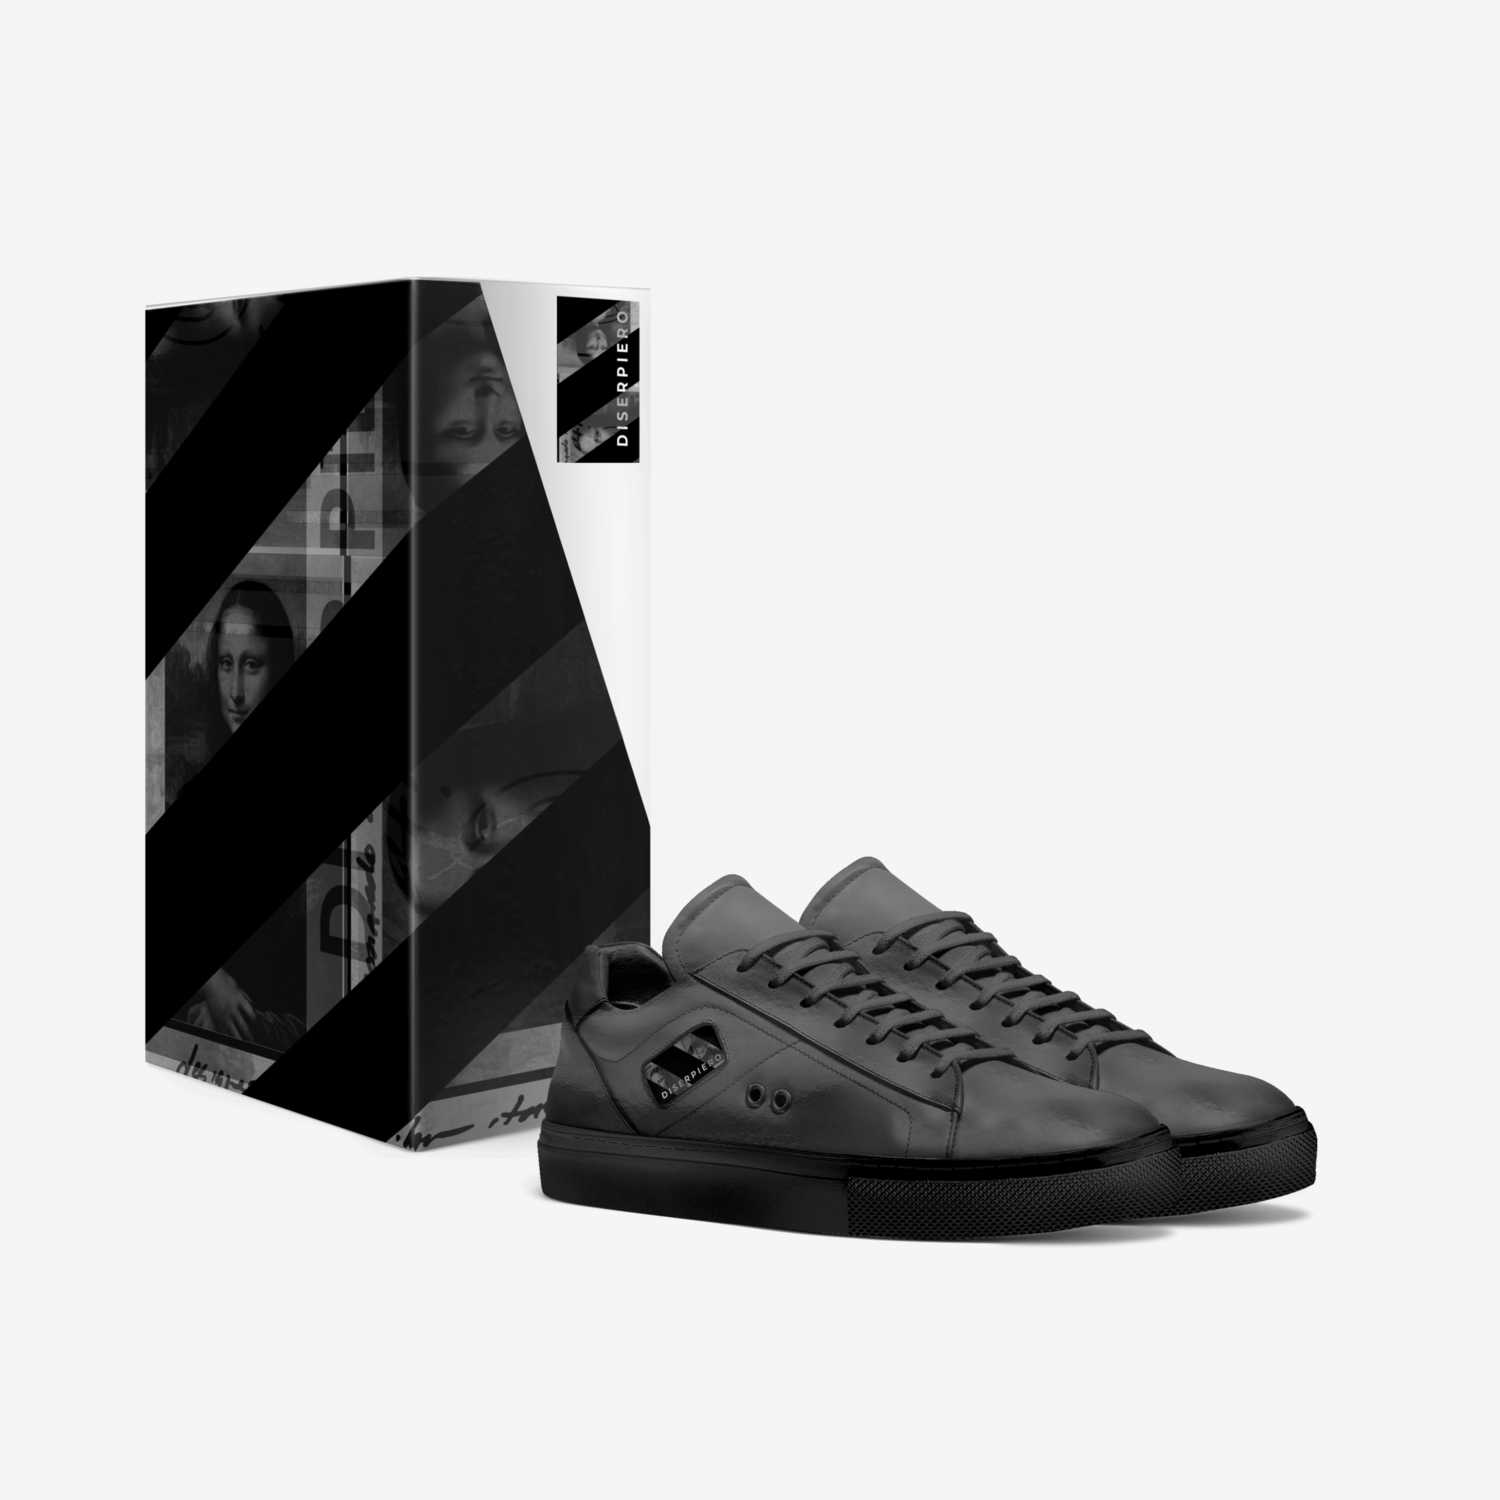 BLACK PIERO custom made in Italy shoes by Di Ser Piero | Box view